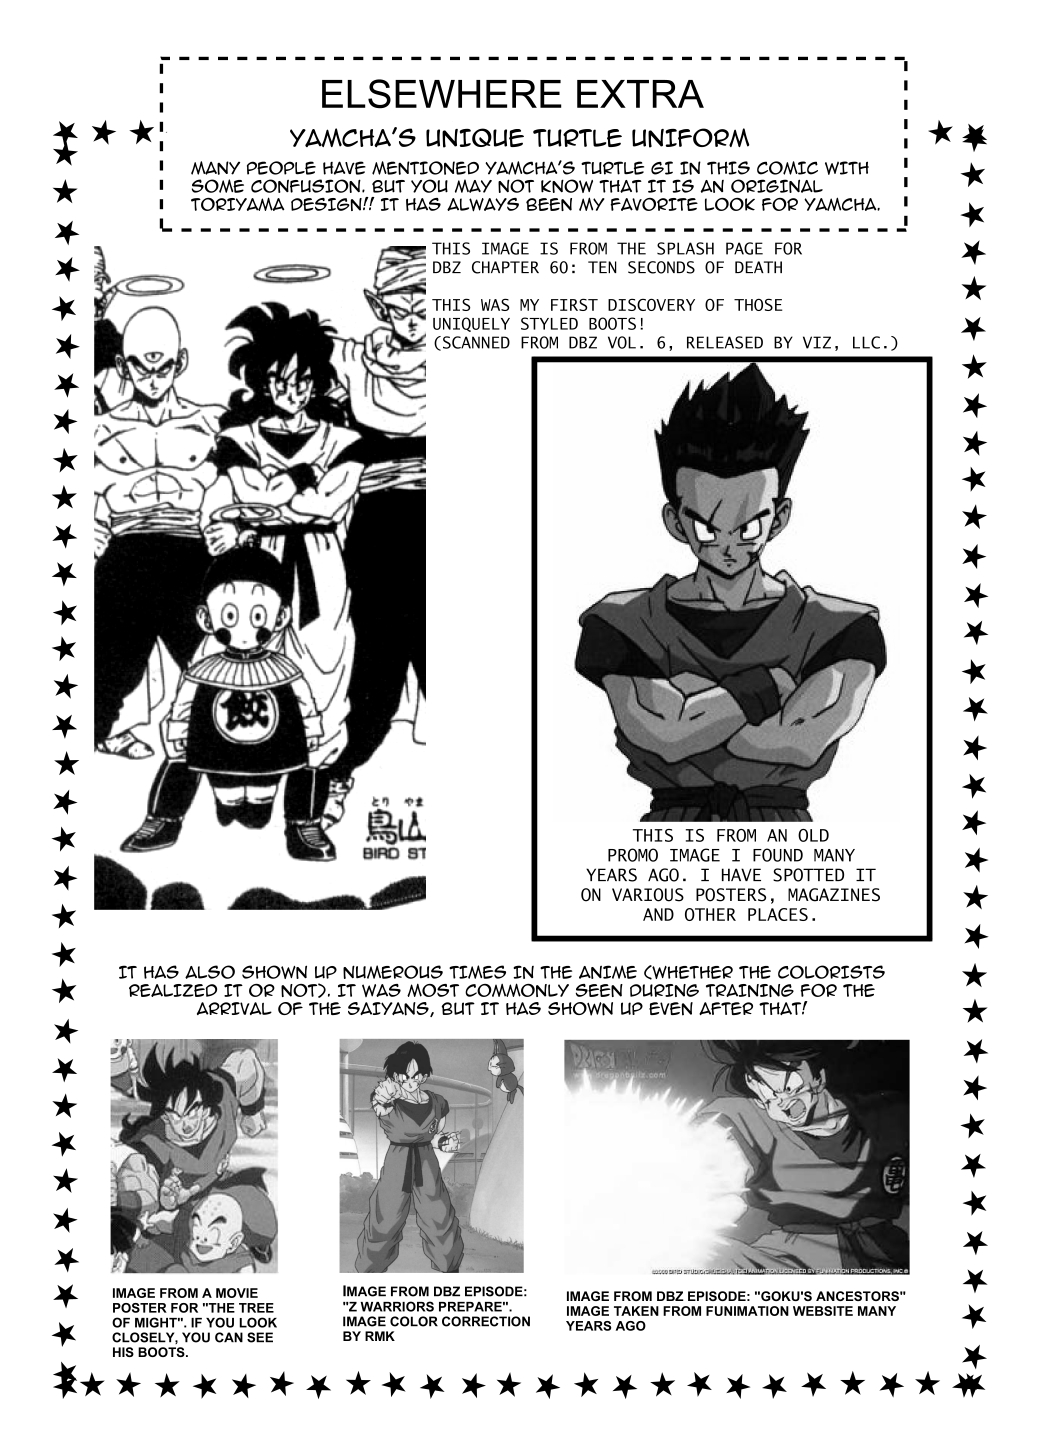 Akira Toriyama: Dragon Ball Z: The Tree of Might Anime Comic